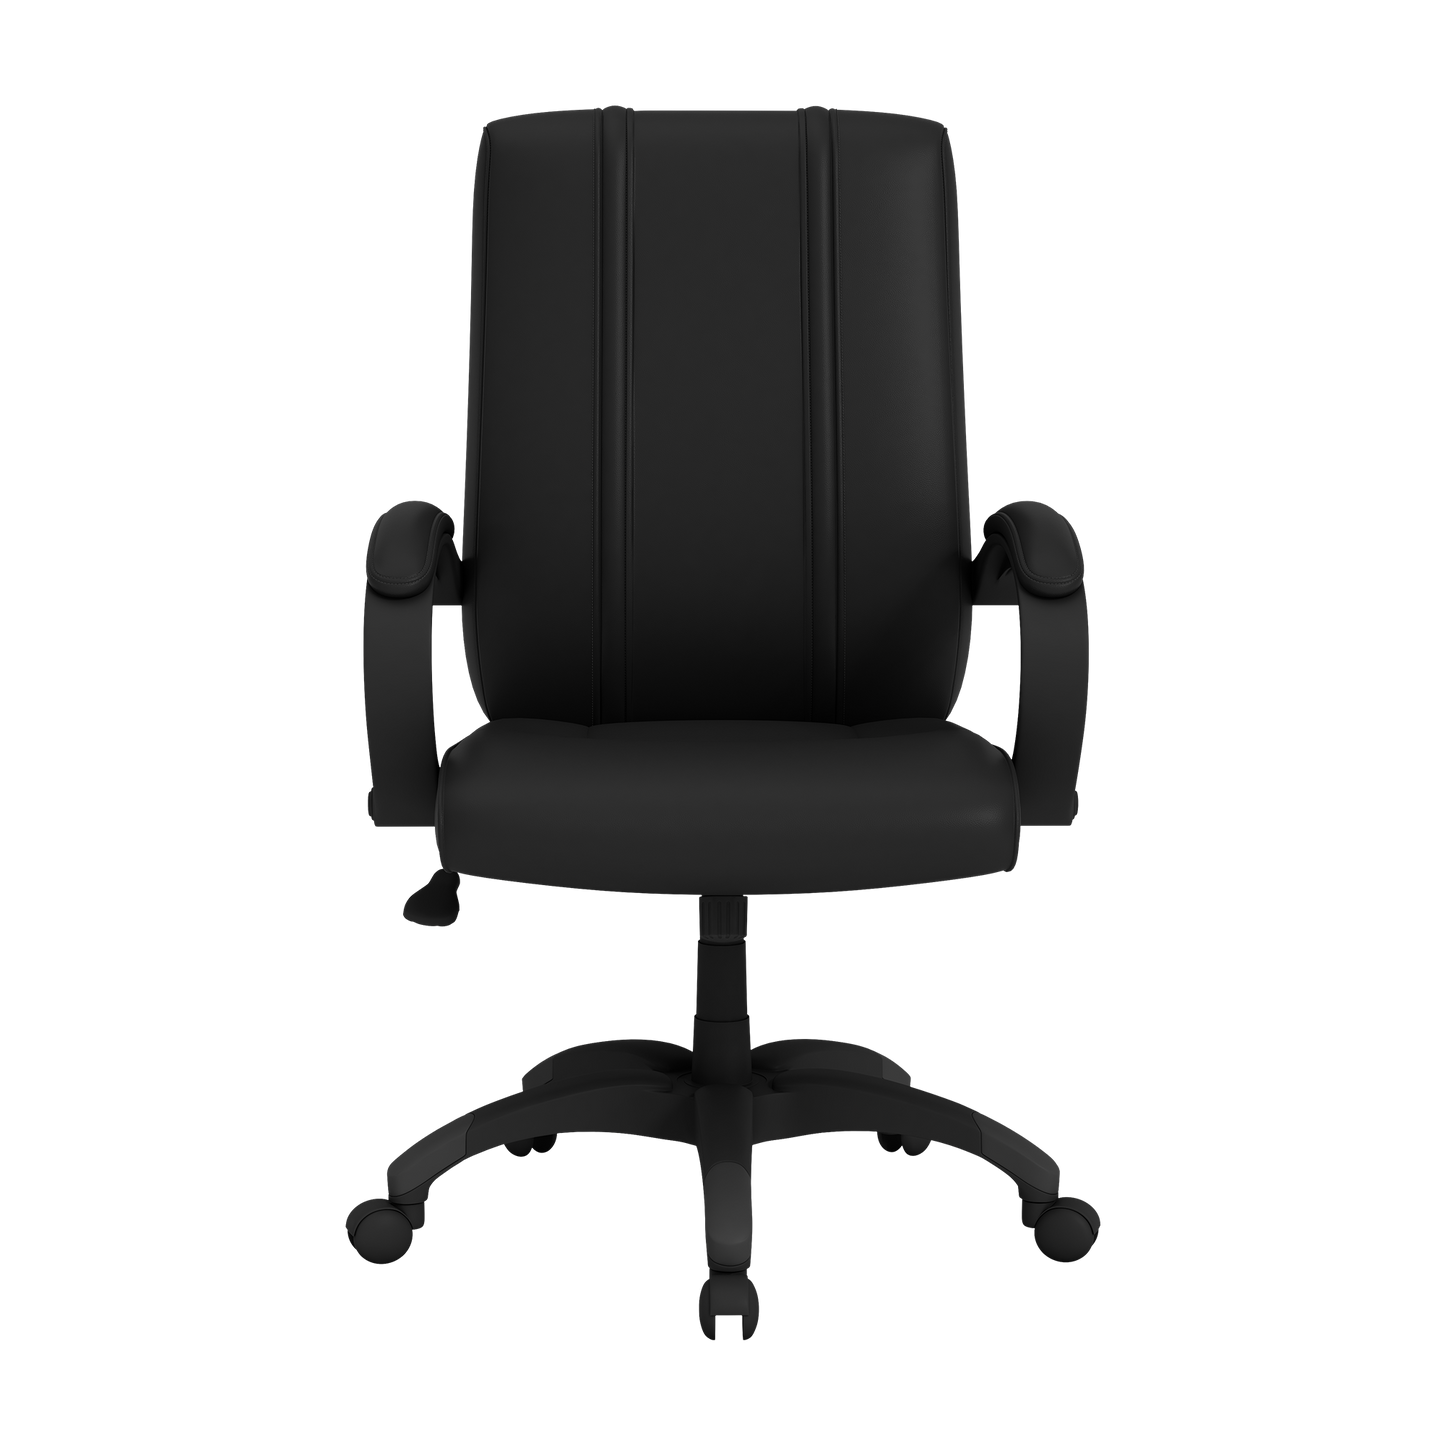 Office Chair 1000 with Minnesota State Mavericks Logo